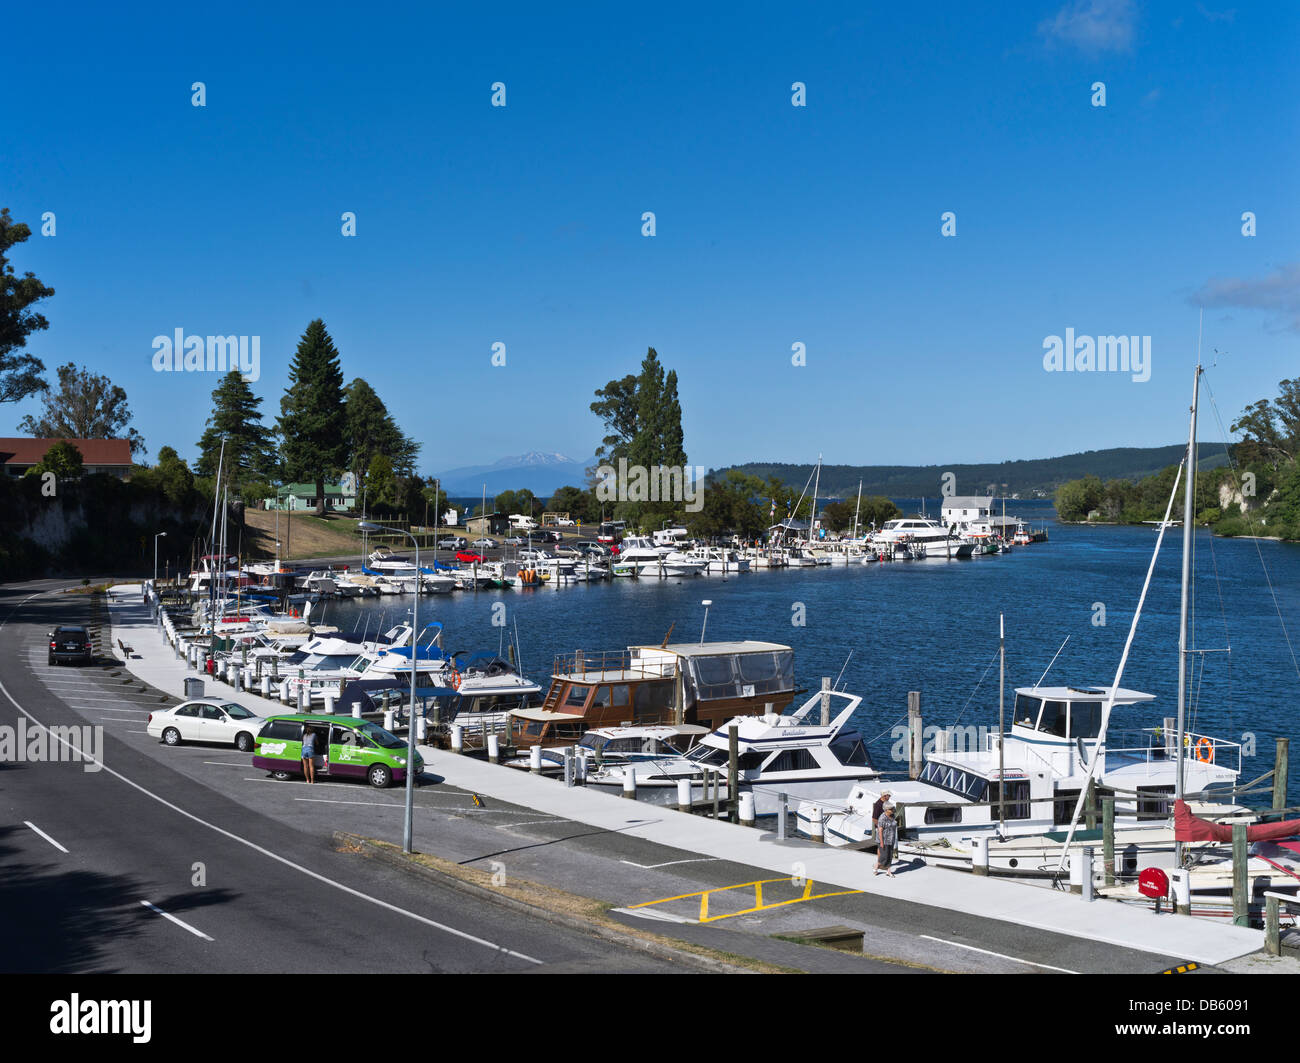 dh Lake Taupo TAUPO NEW ZEALAND Boat marina riverside Waikato River Stock Photo